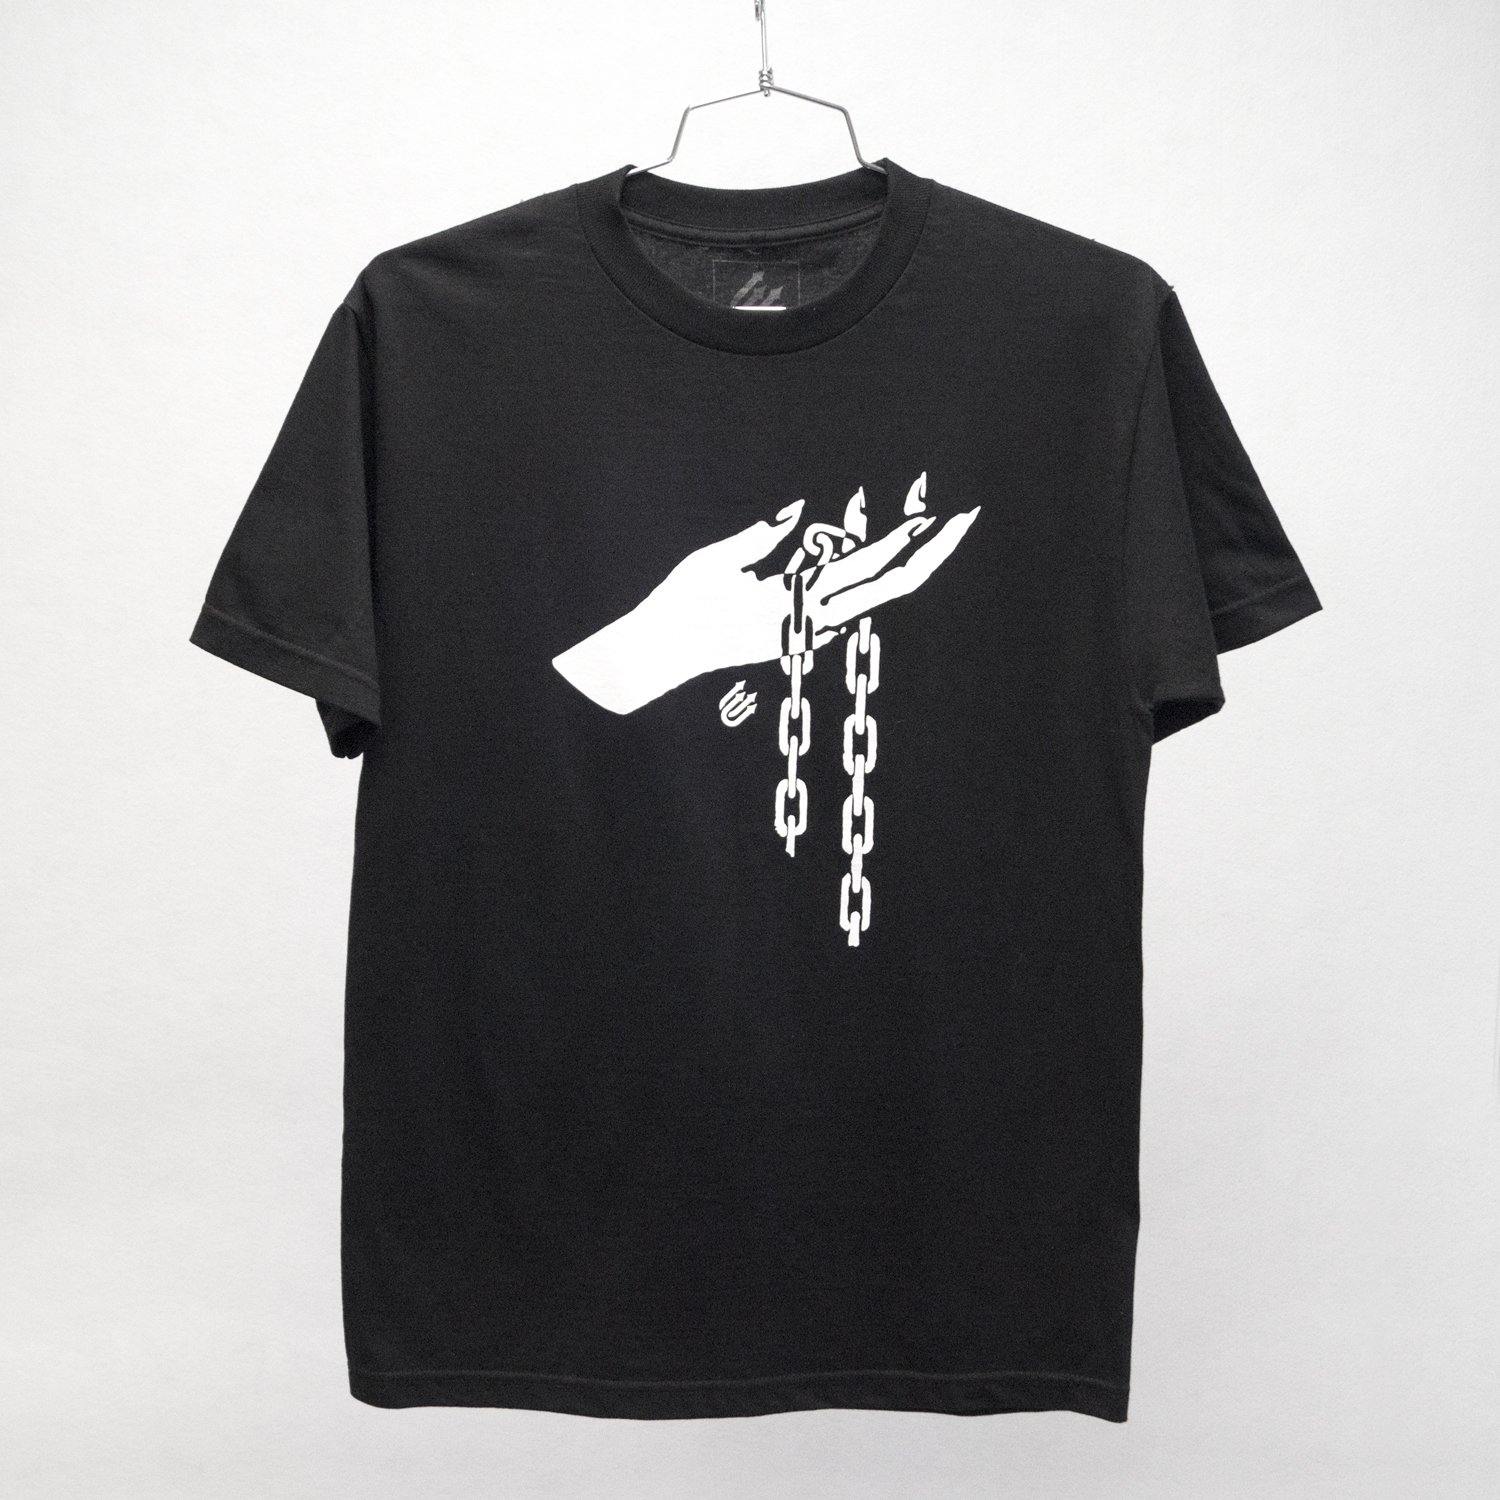 Buy – Chain Shirt – Cold Cuts Ltd